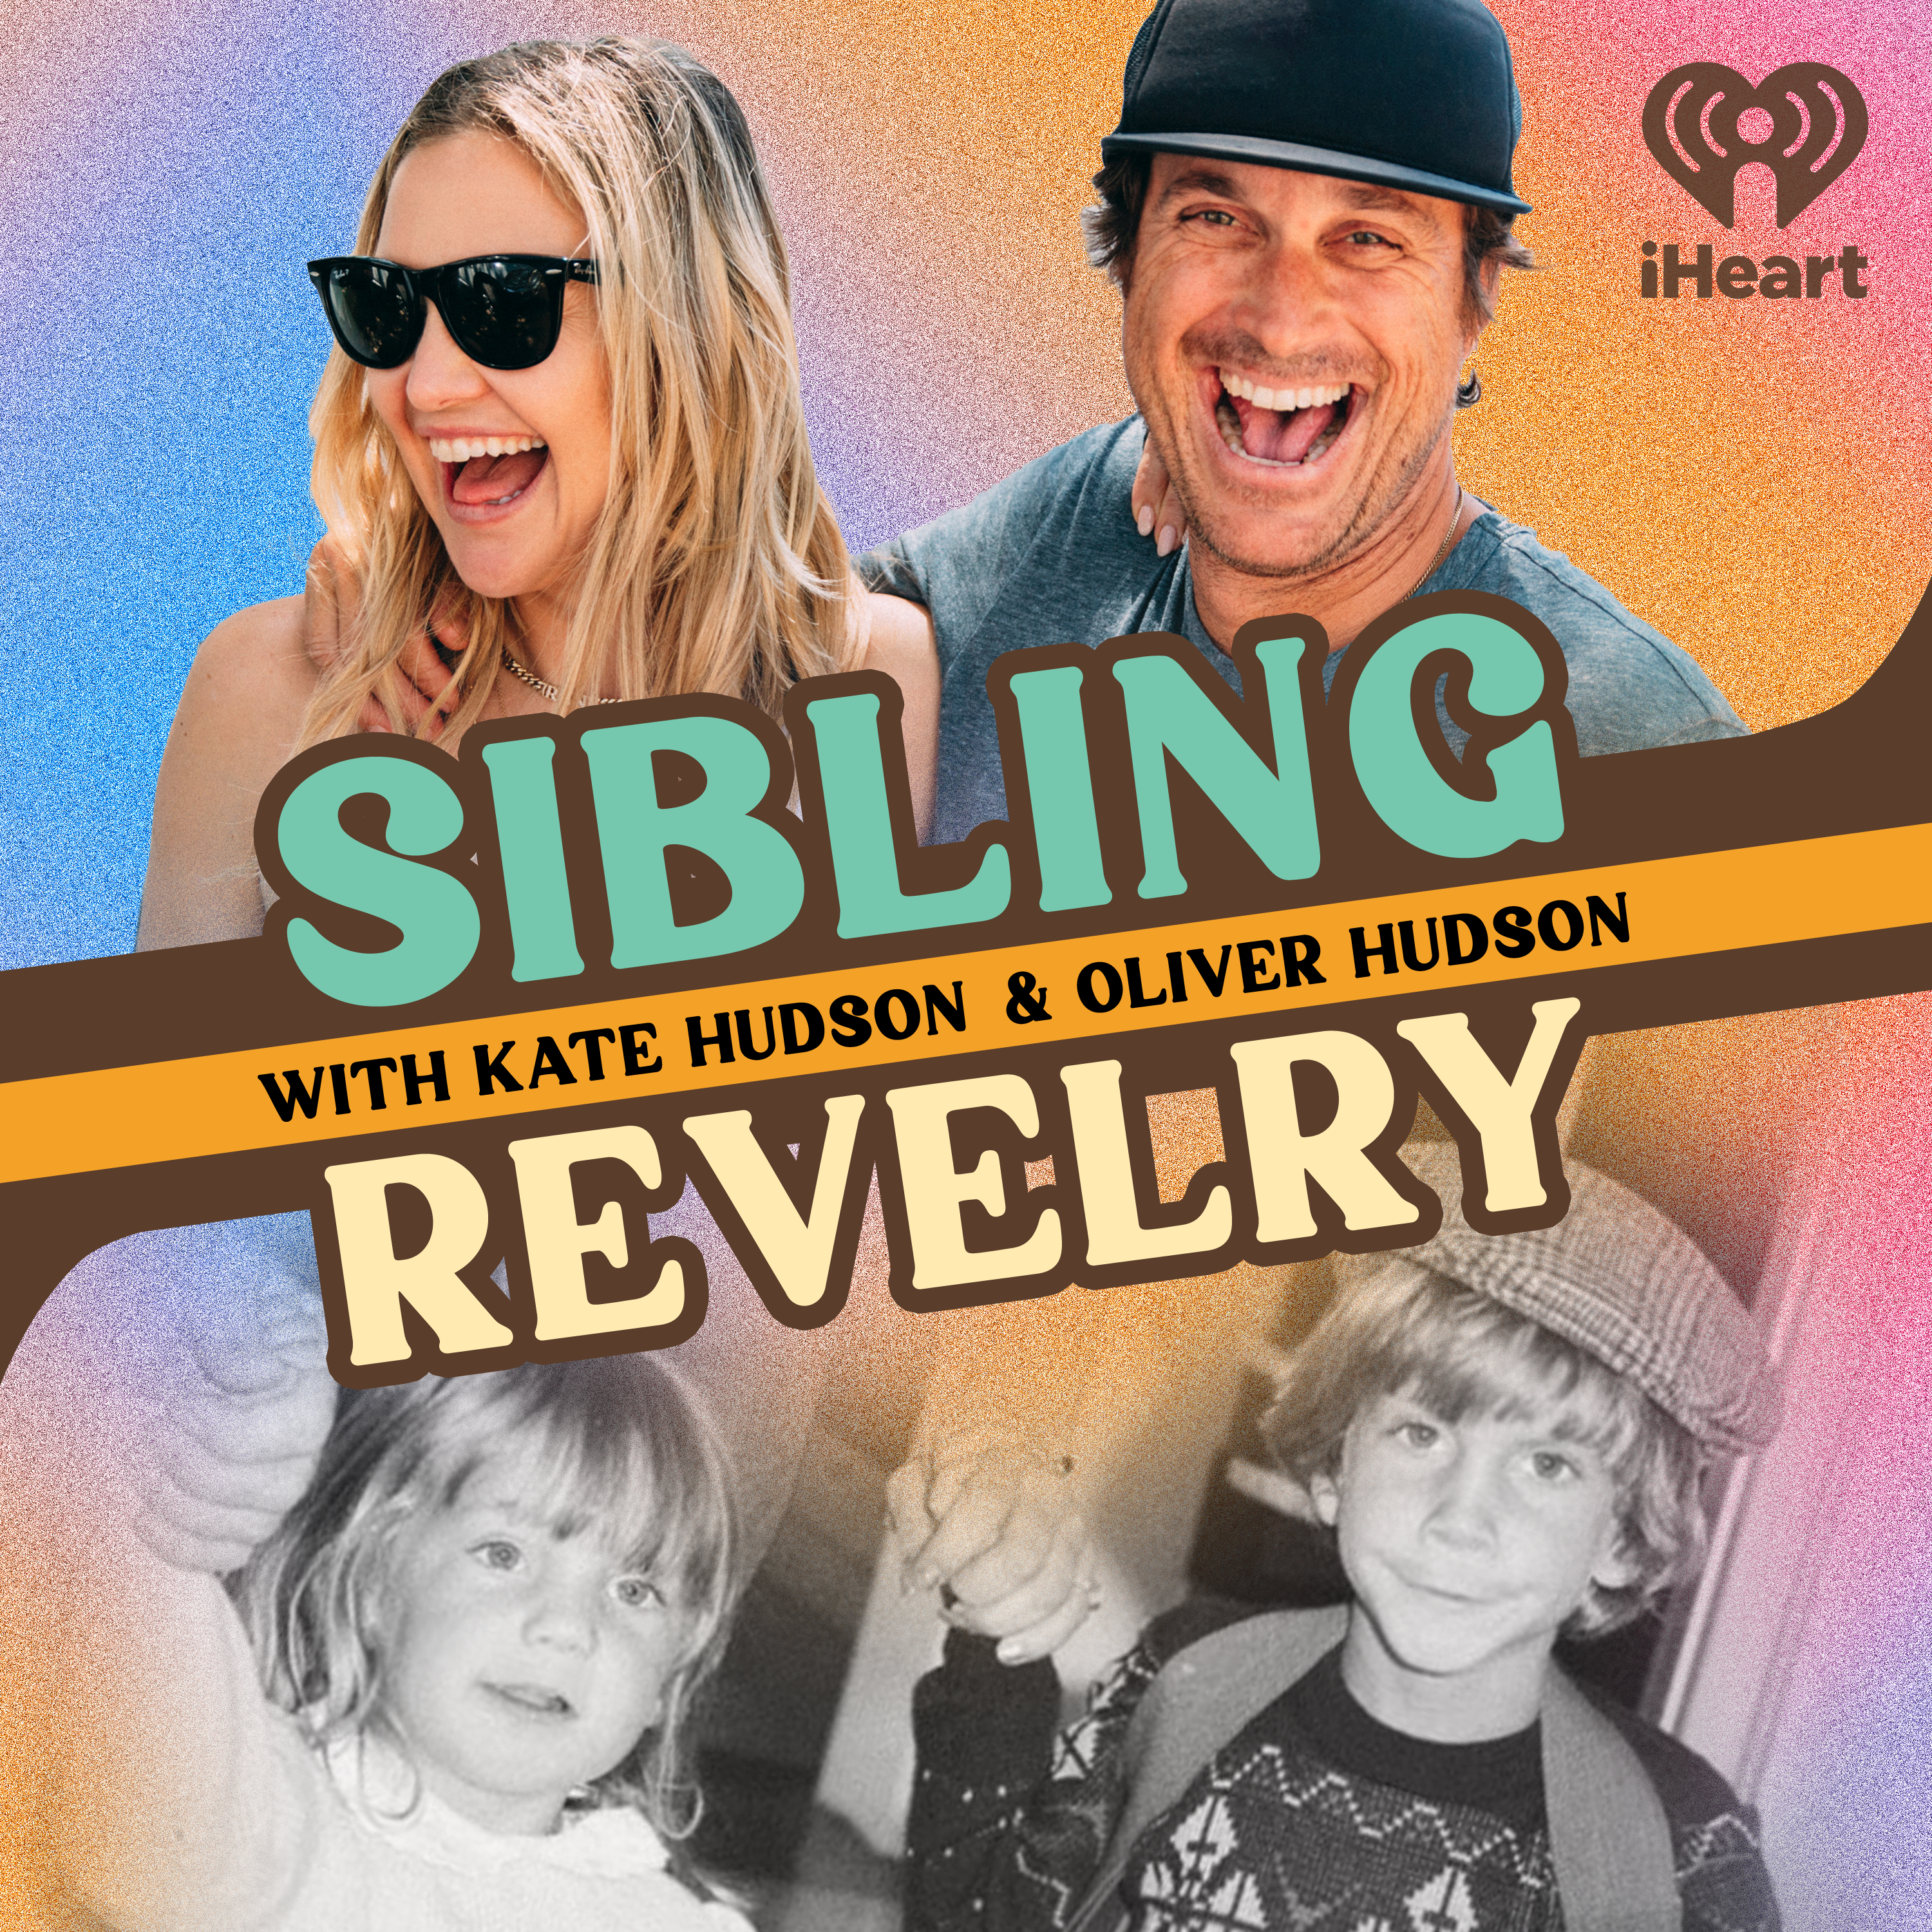 Sibling Revelry Returns! Season 4 begins January 8th